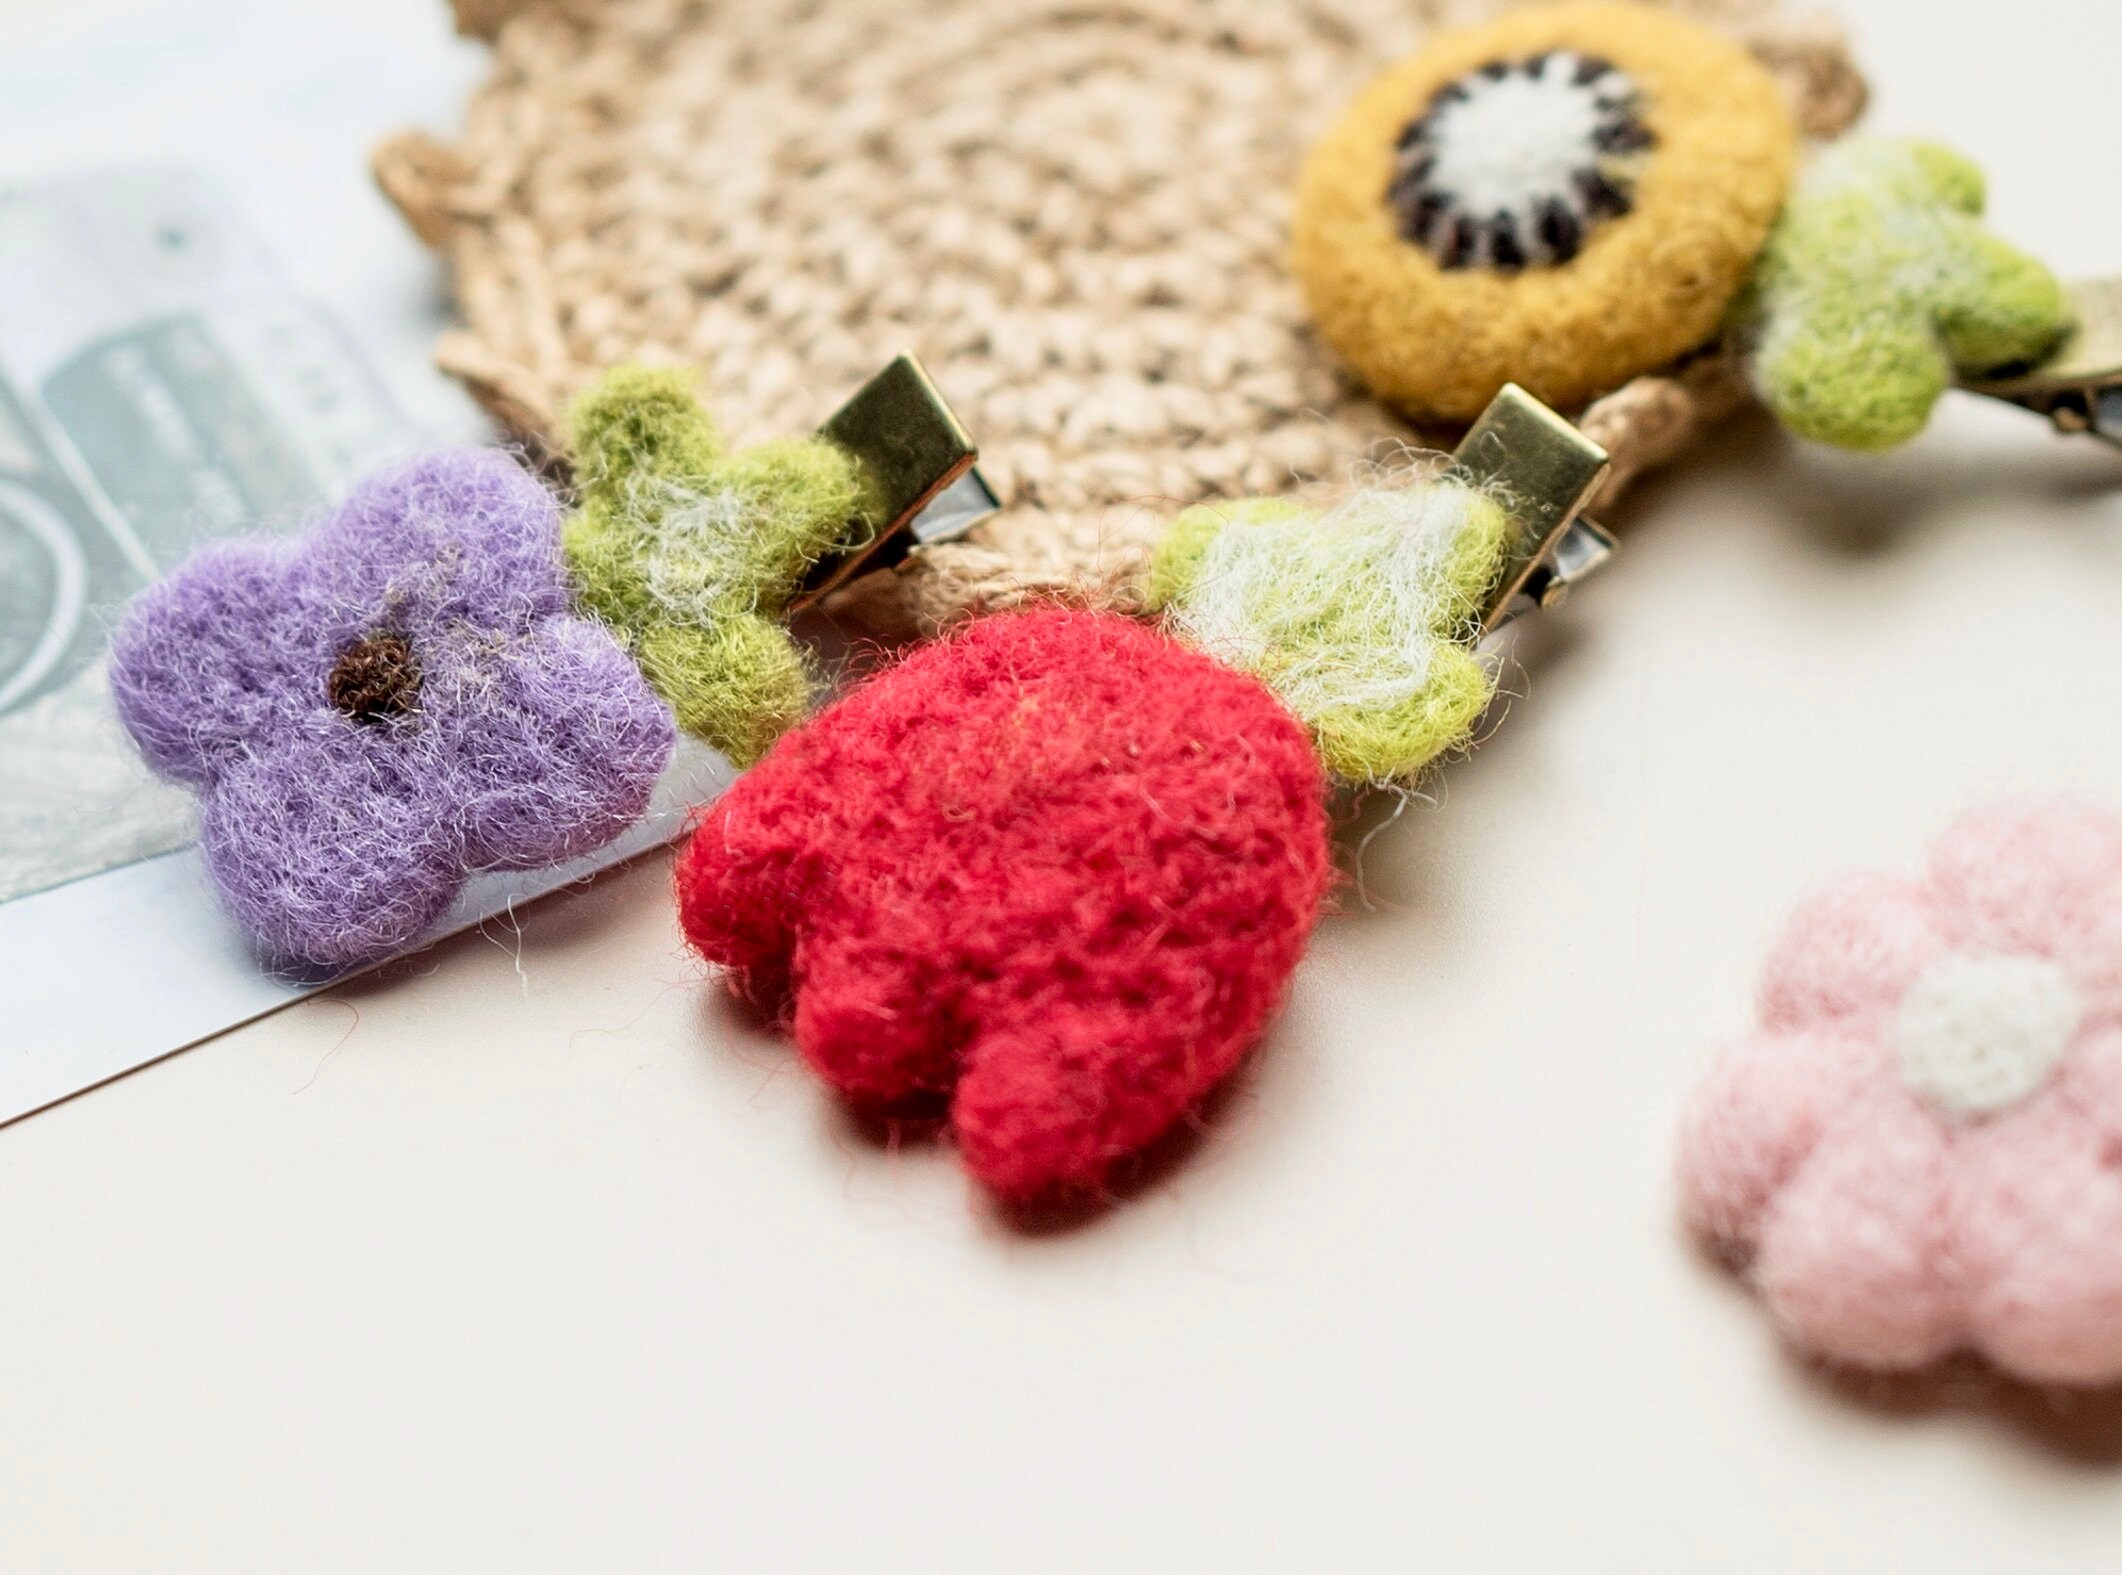  COHEALI 2pcs Felt Flowers for Crafts Wool Felt Balls